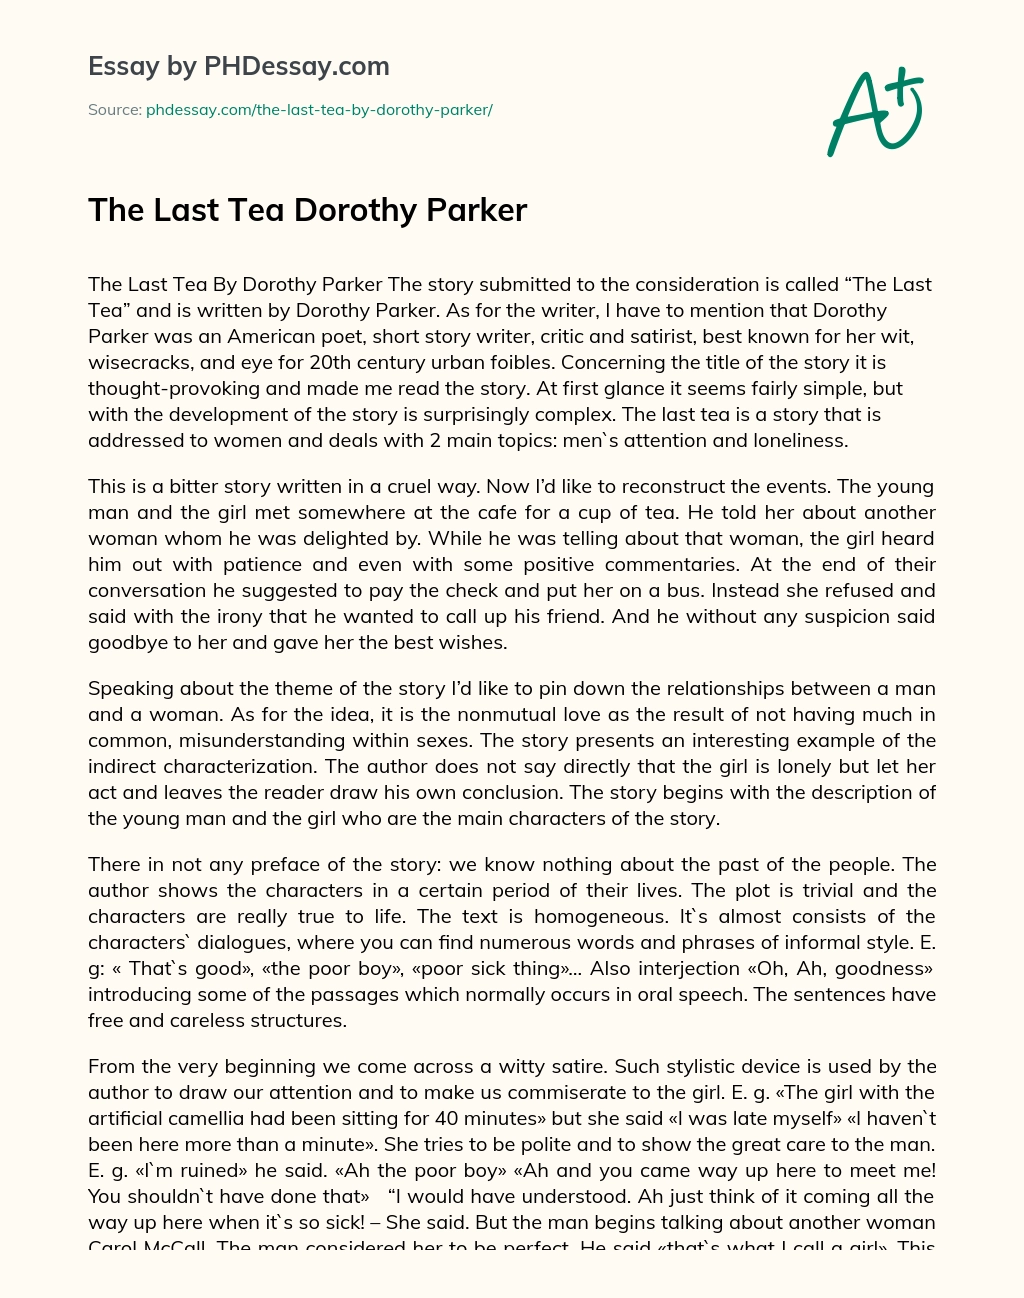 The Last Tea Dorothy Parker essay